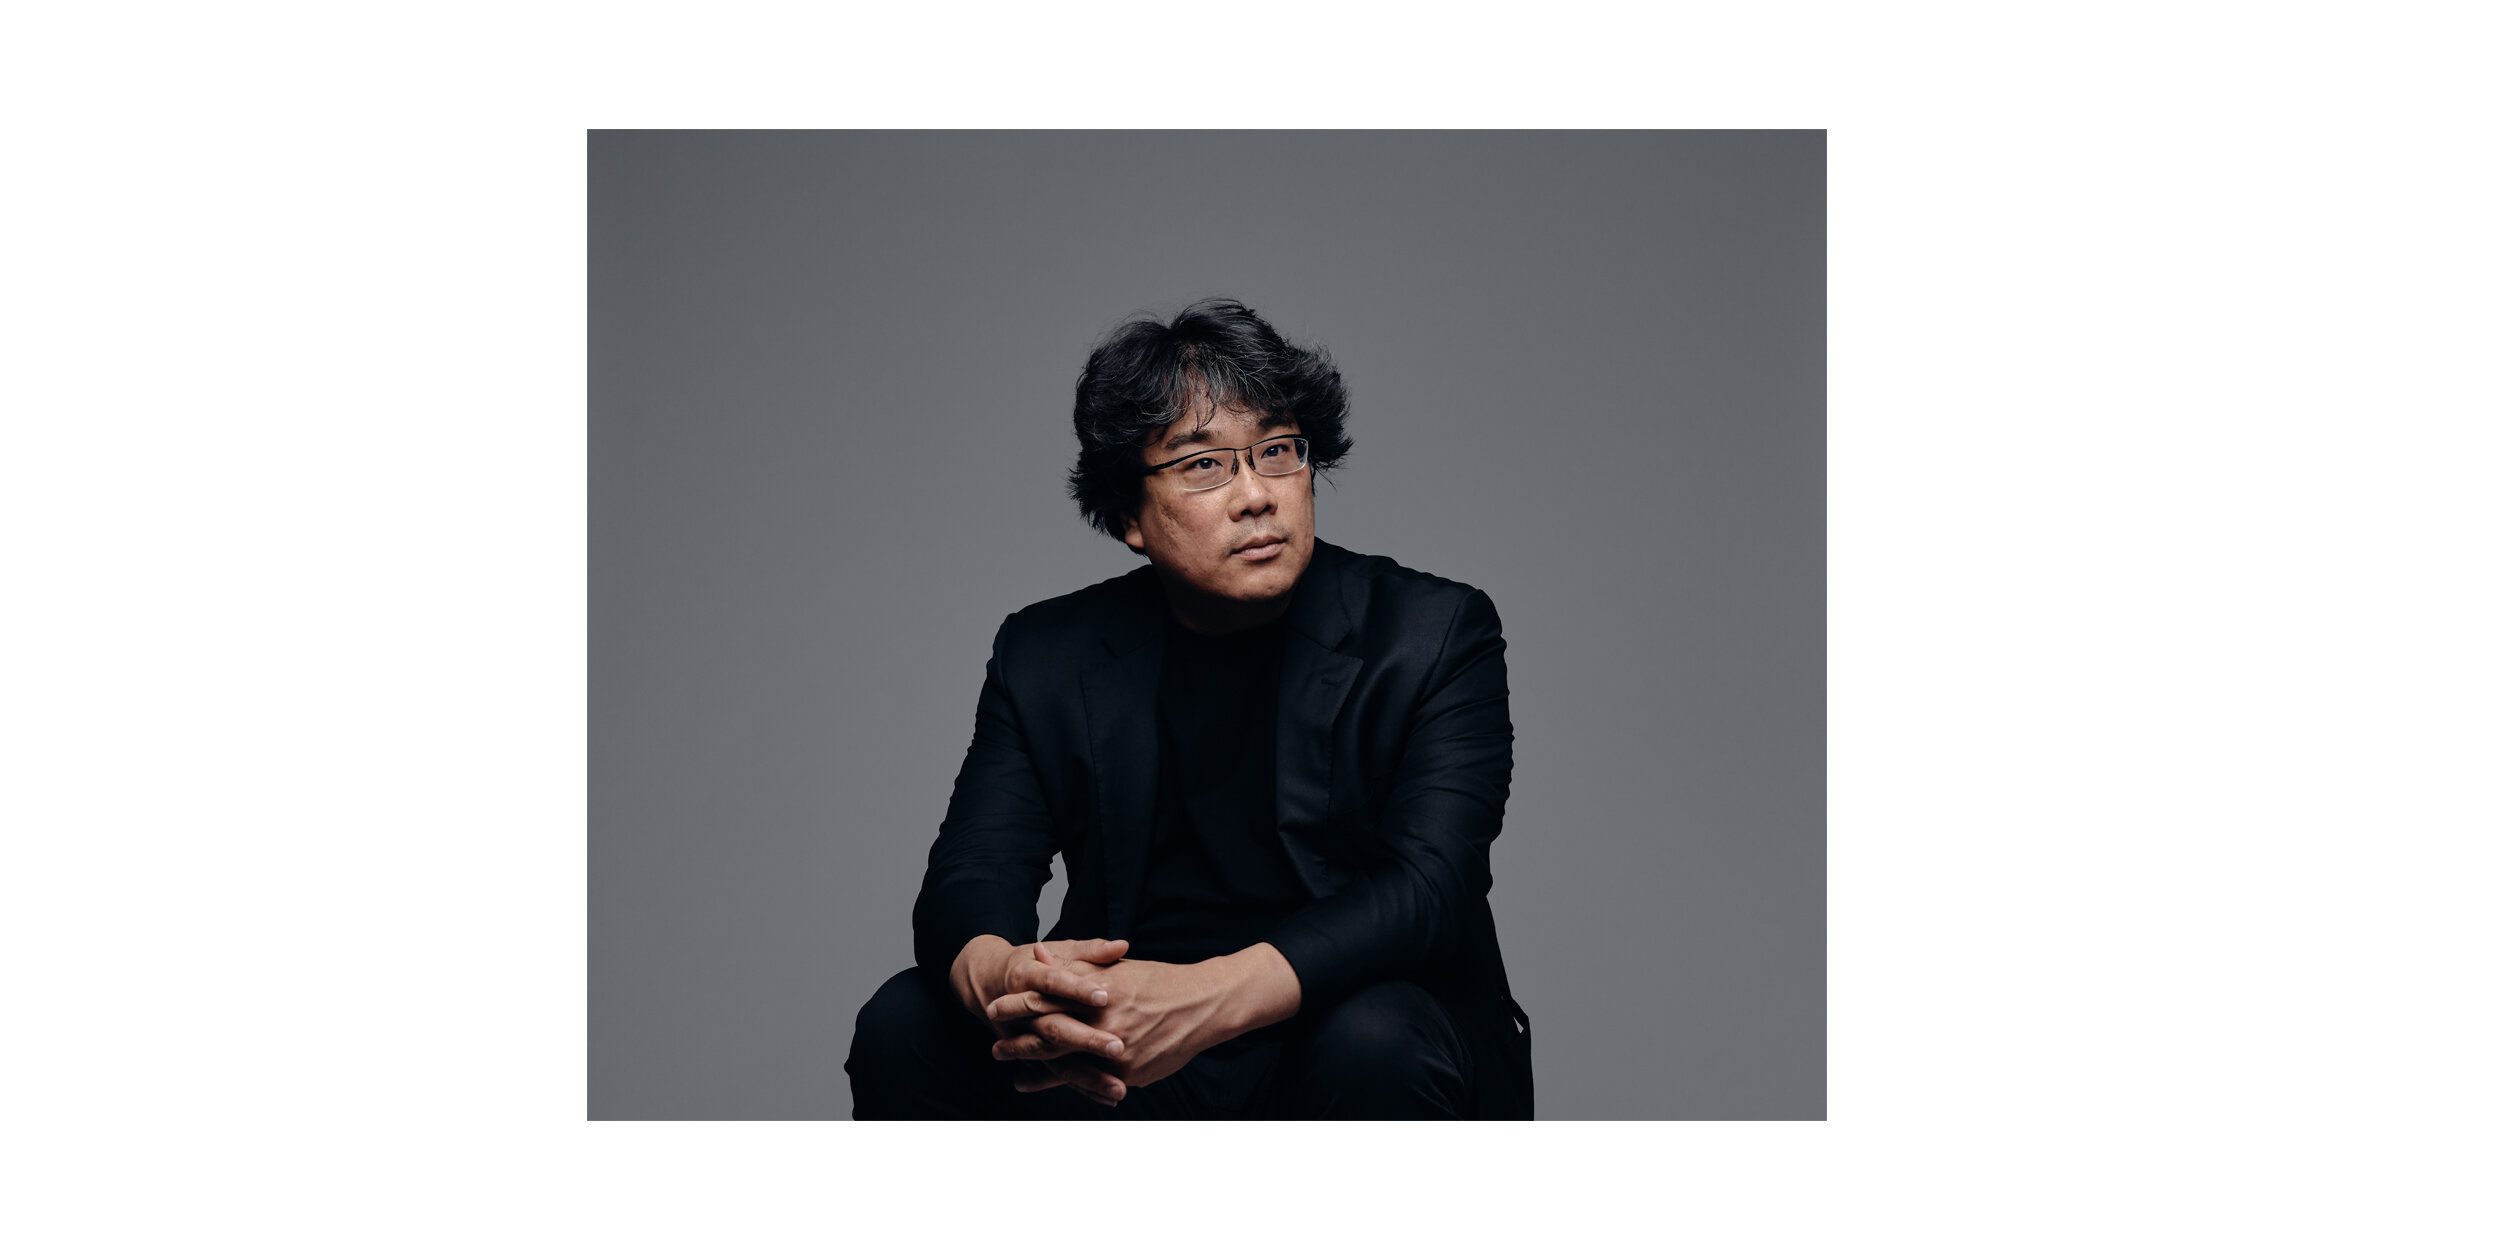  Bong Joon-ho, Director - THE NEW YORK TIMES 